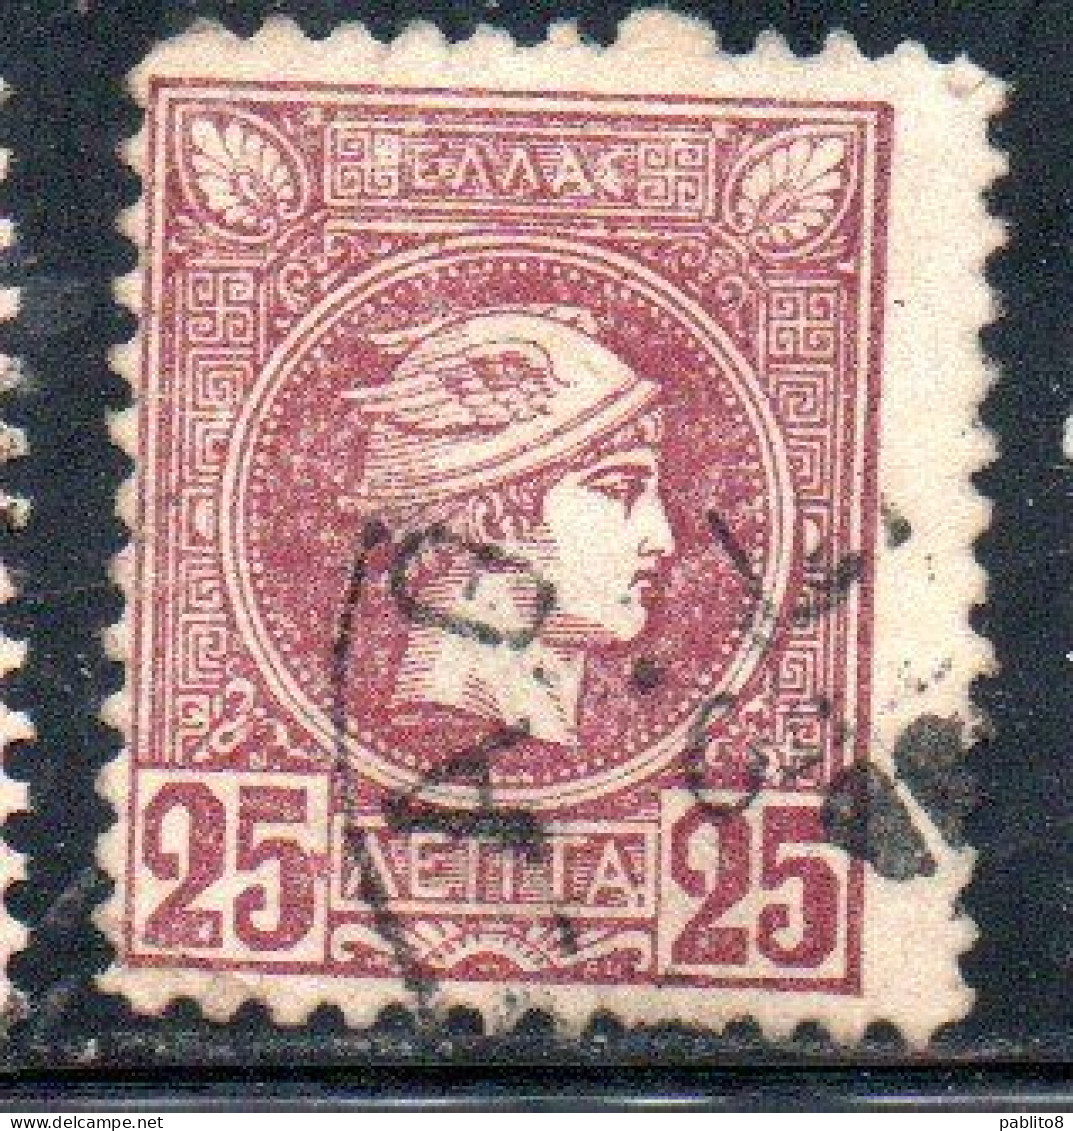 GREECE GRECIA HELLAS 1889 1895 VARIEY LARGER HERMES MERCURY MERCURIO LEPTA 25l USED USATO OBLITERE' - Used Stamps